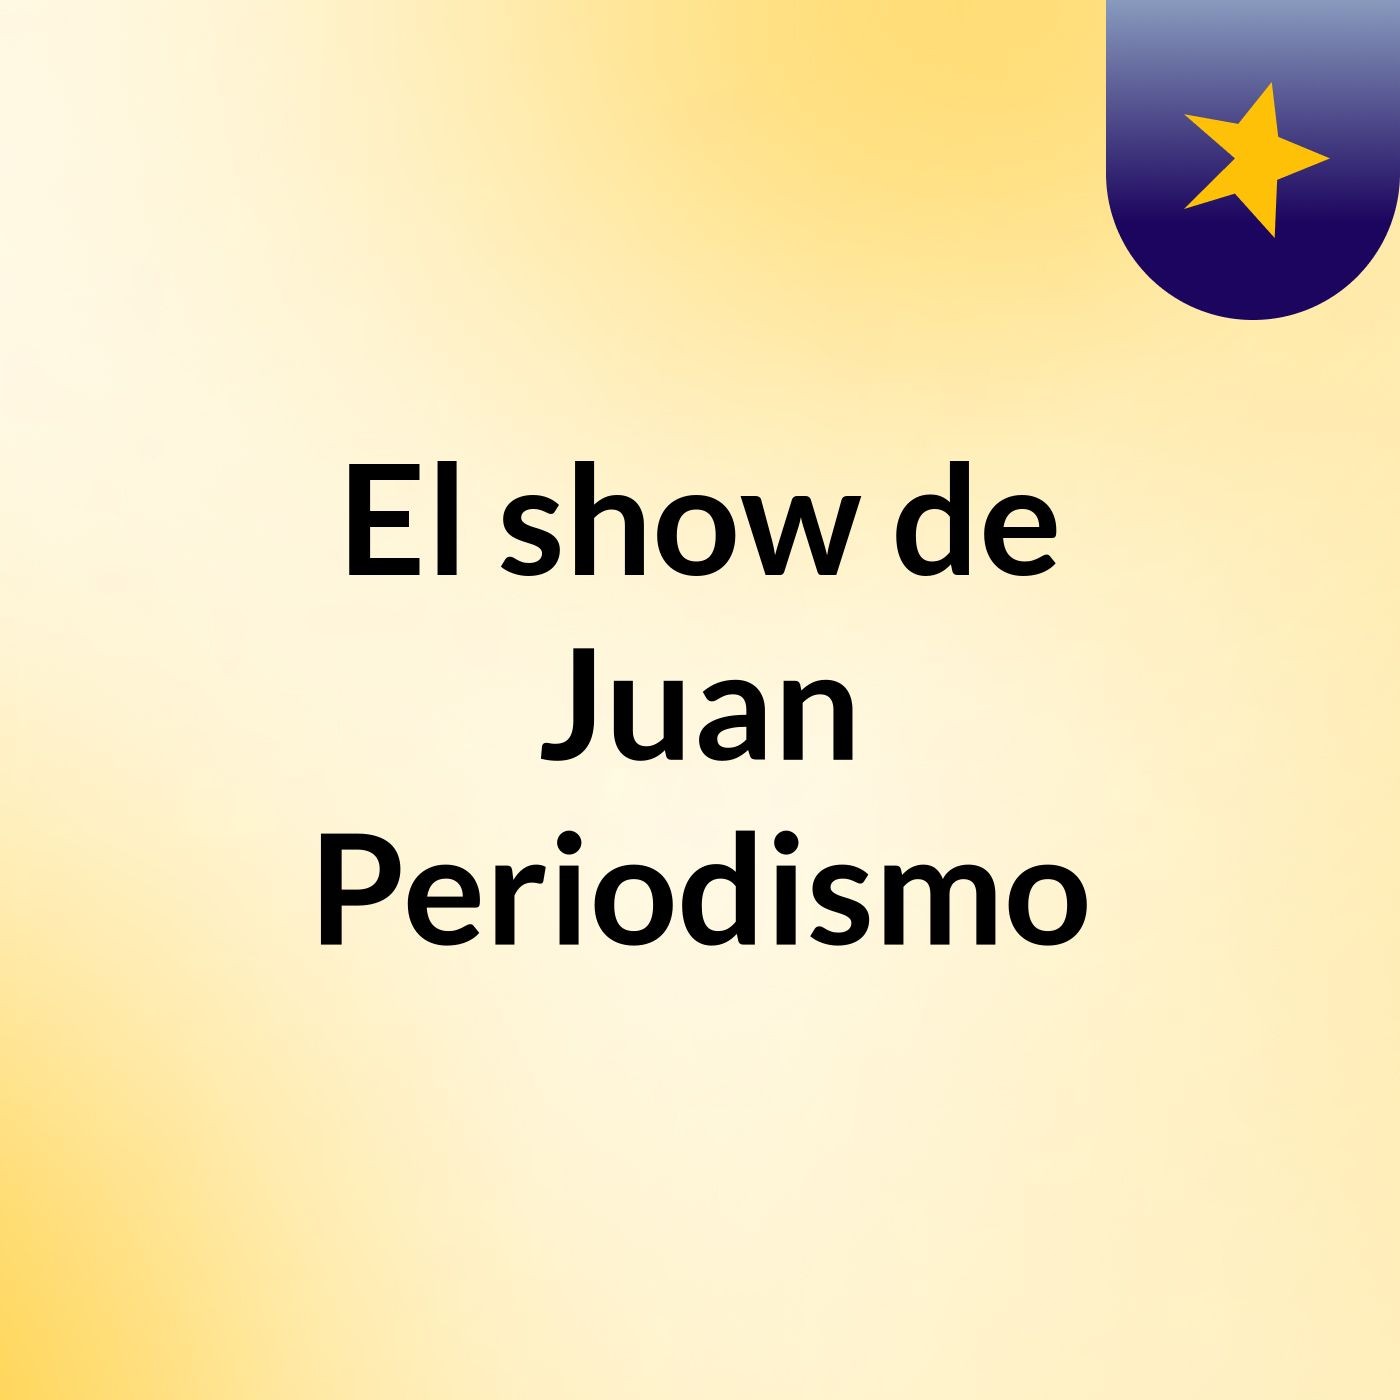 Episodio 6 - El show de Juan Periodismo